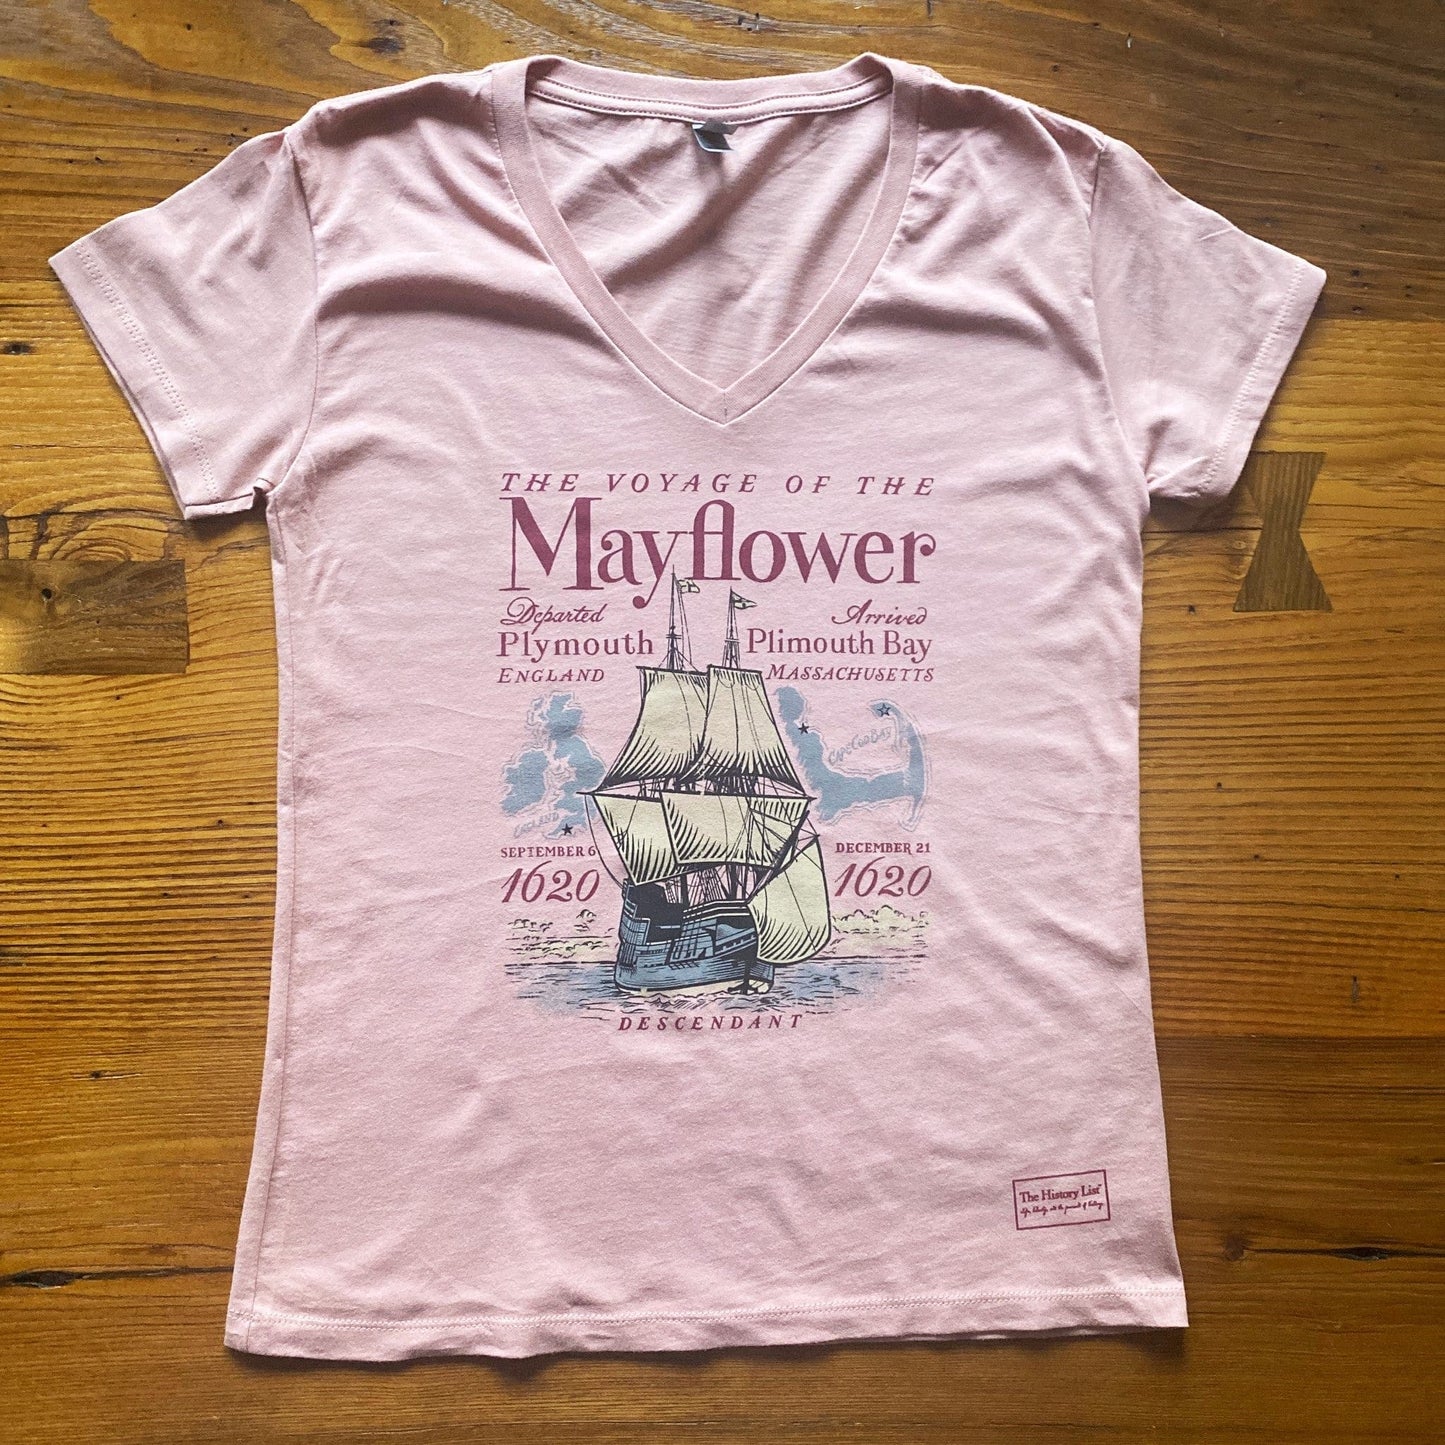 Desert Pink "The Voyage of the Mayflower" Women's v-neck shirt from the history list store